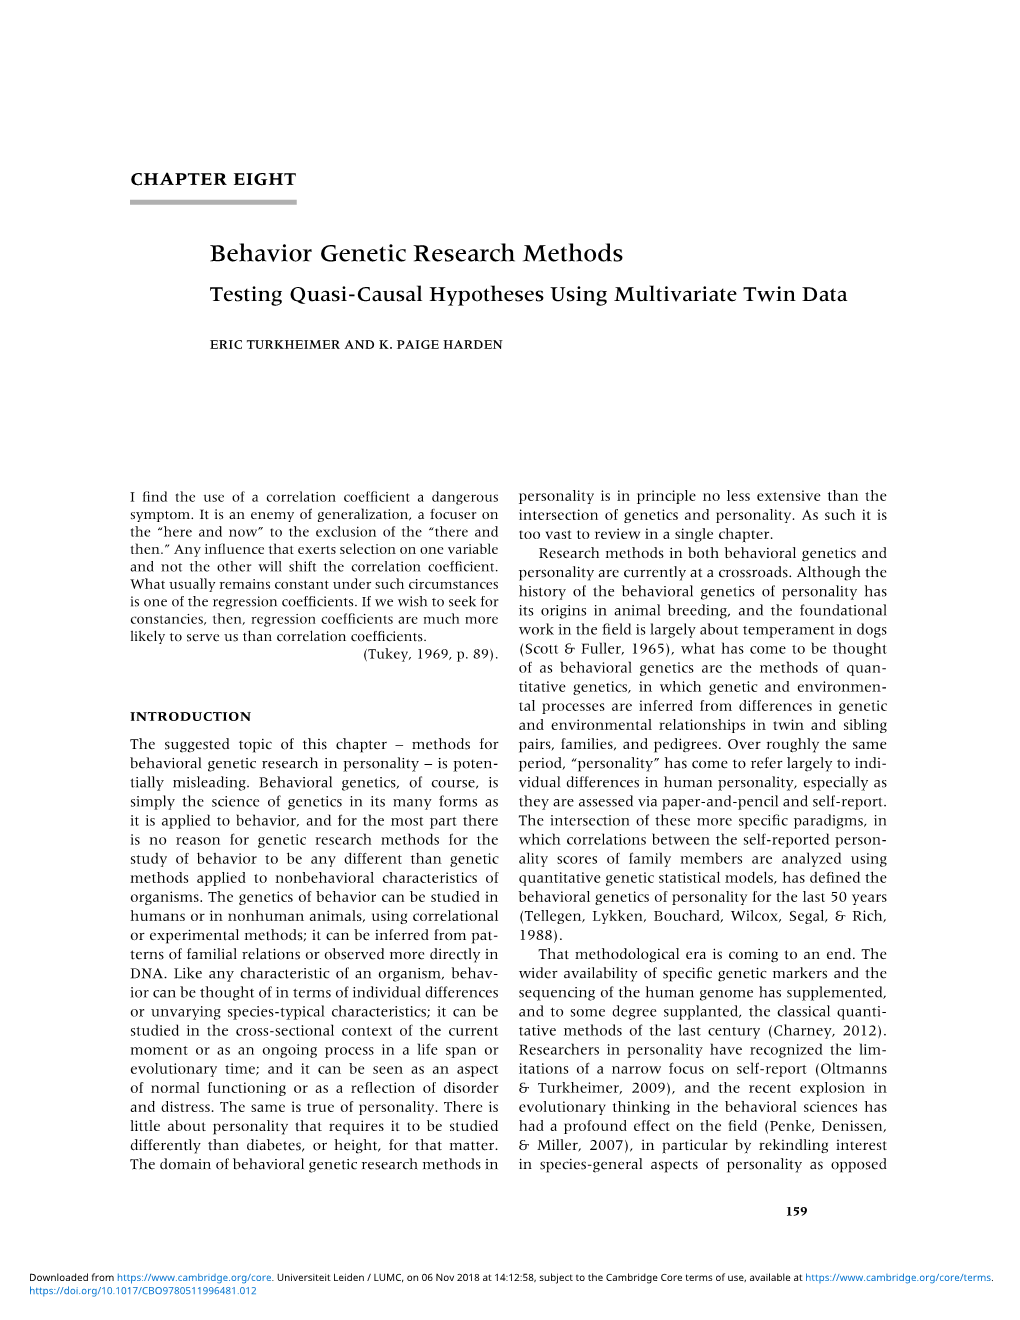 Behavior Genetic Research Methods: Testing Quasi-Causal Hypotheses